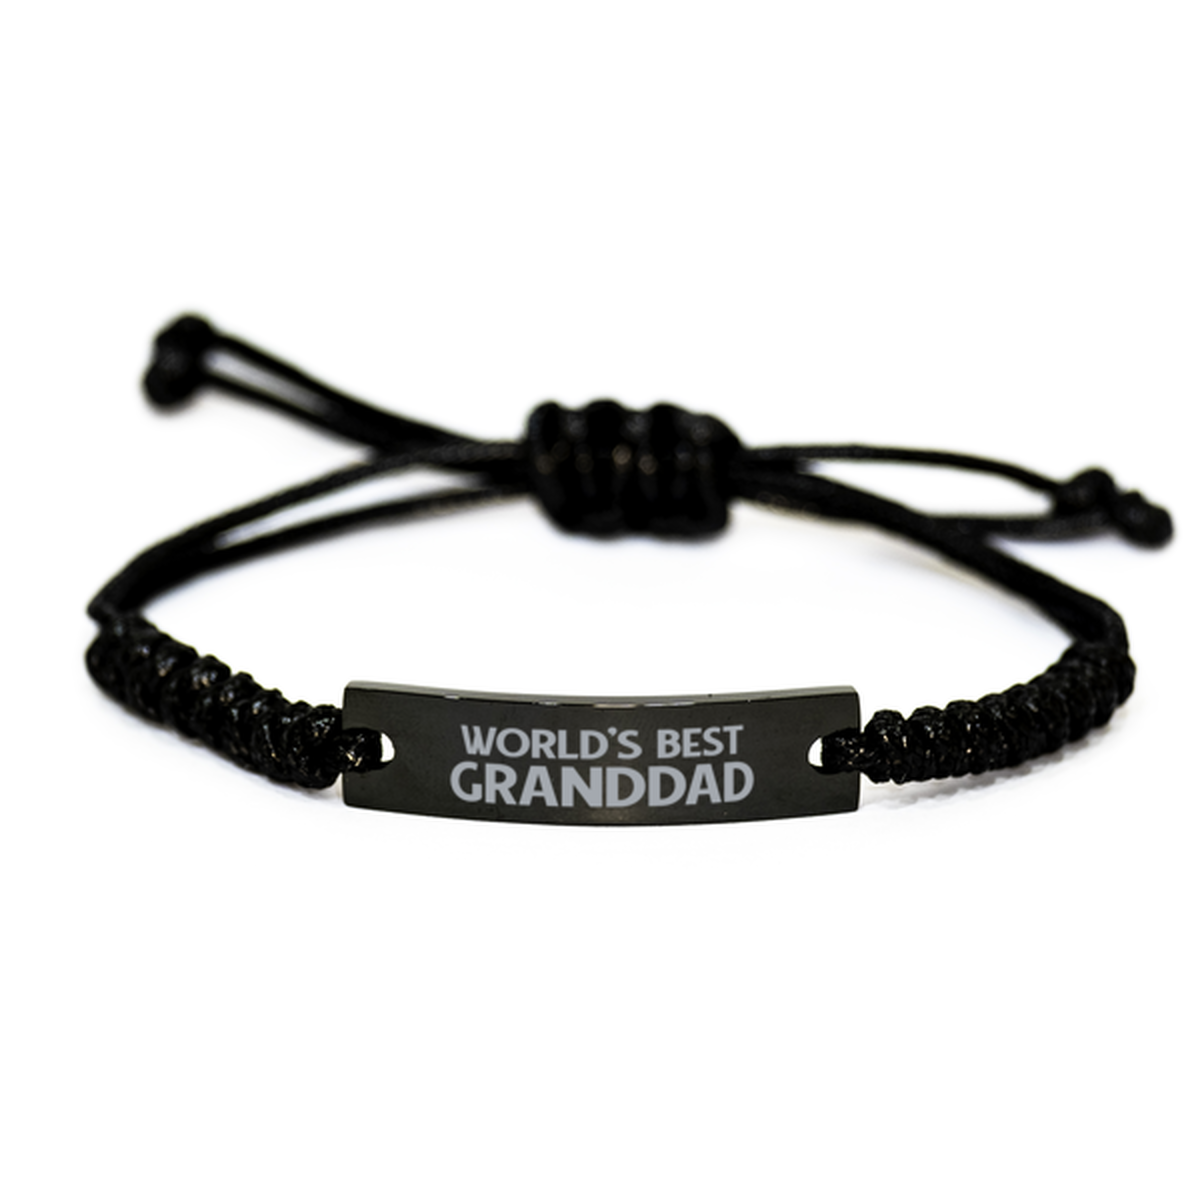 World's Best Granddad Gifts, Funny Engraved Rope Bracelet For Granddad, Birthday Family Gifts For Men